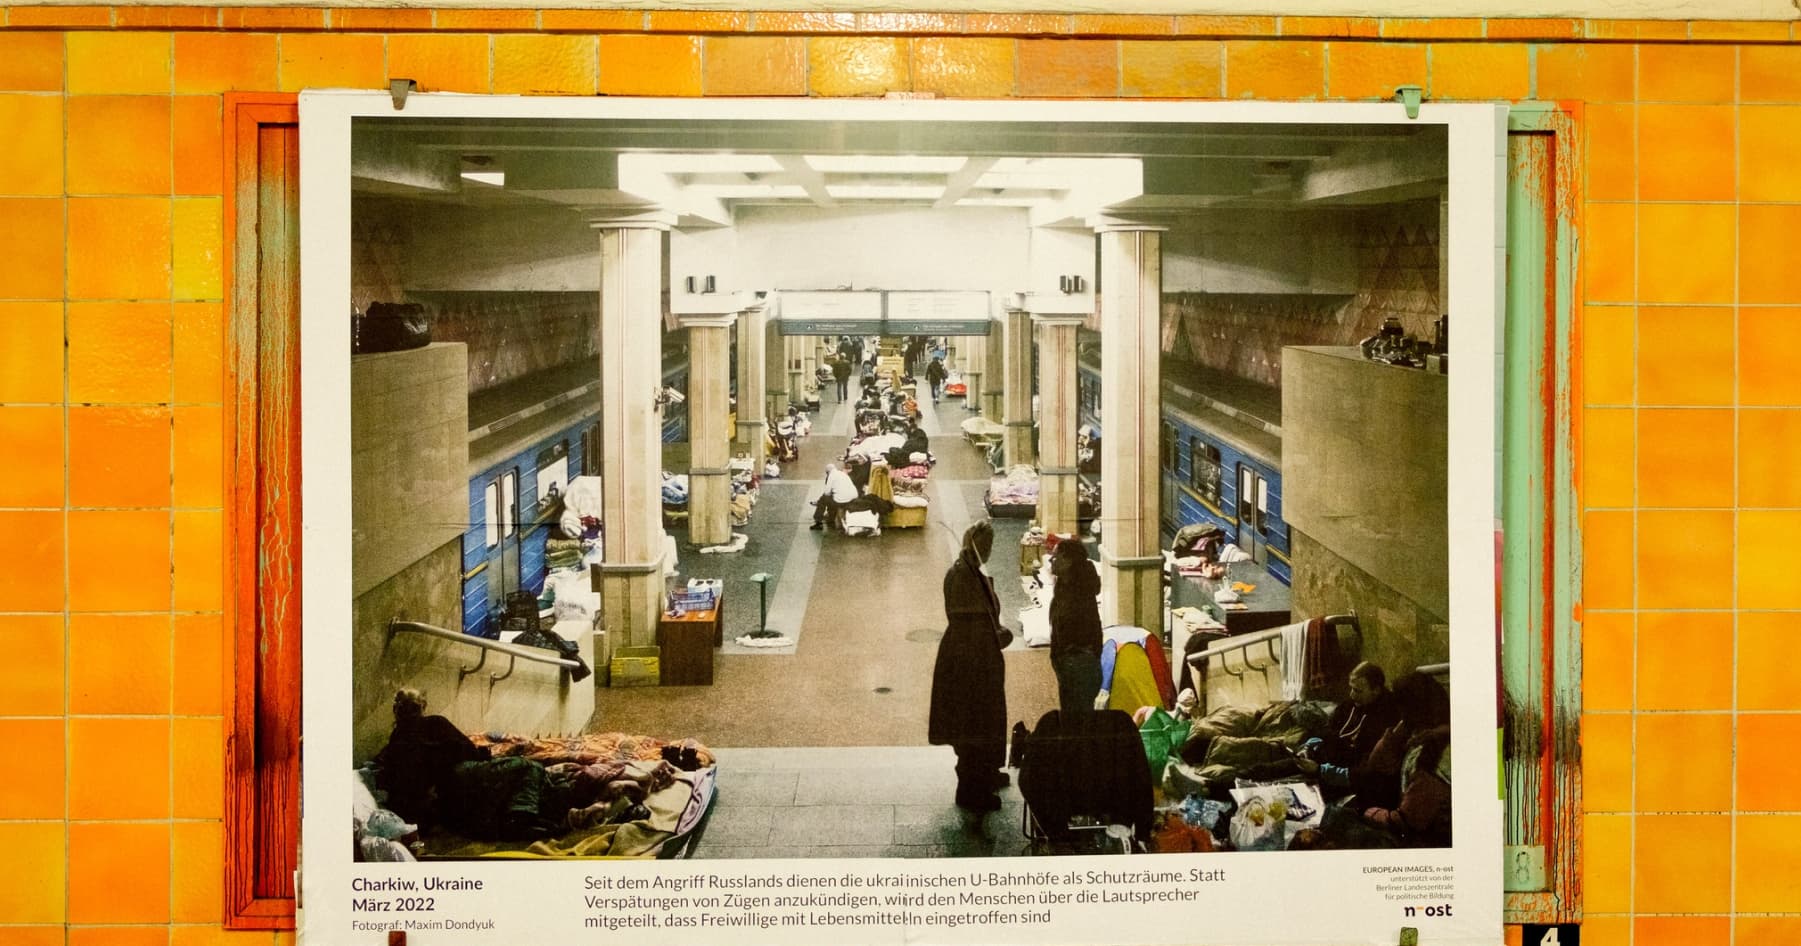 On November 14 the photo exhibition "Next Station: Ukraine" will open in Berlin metro